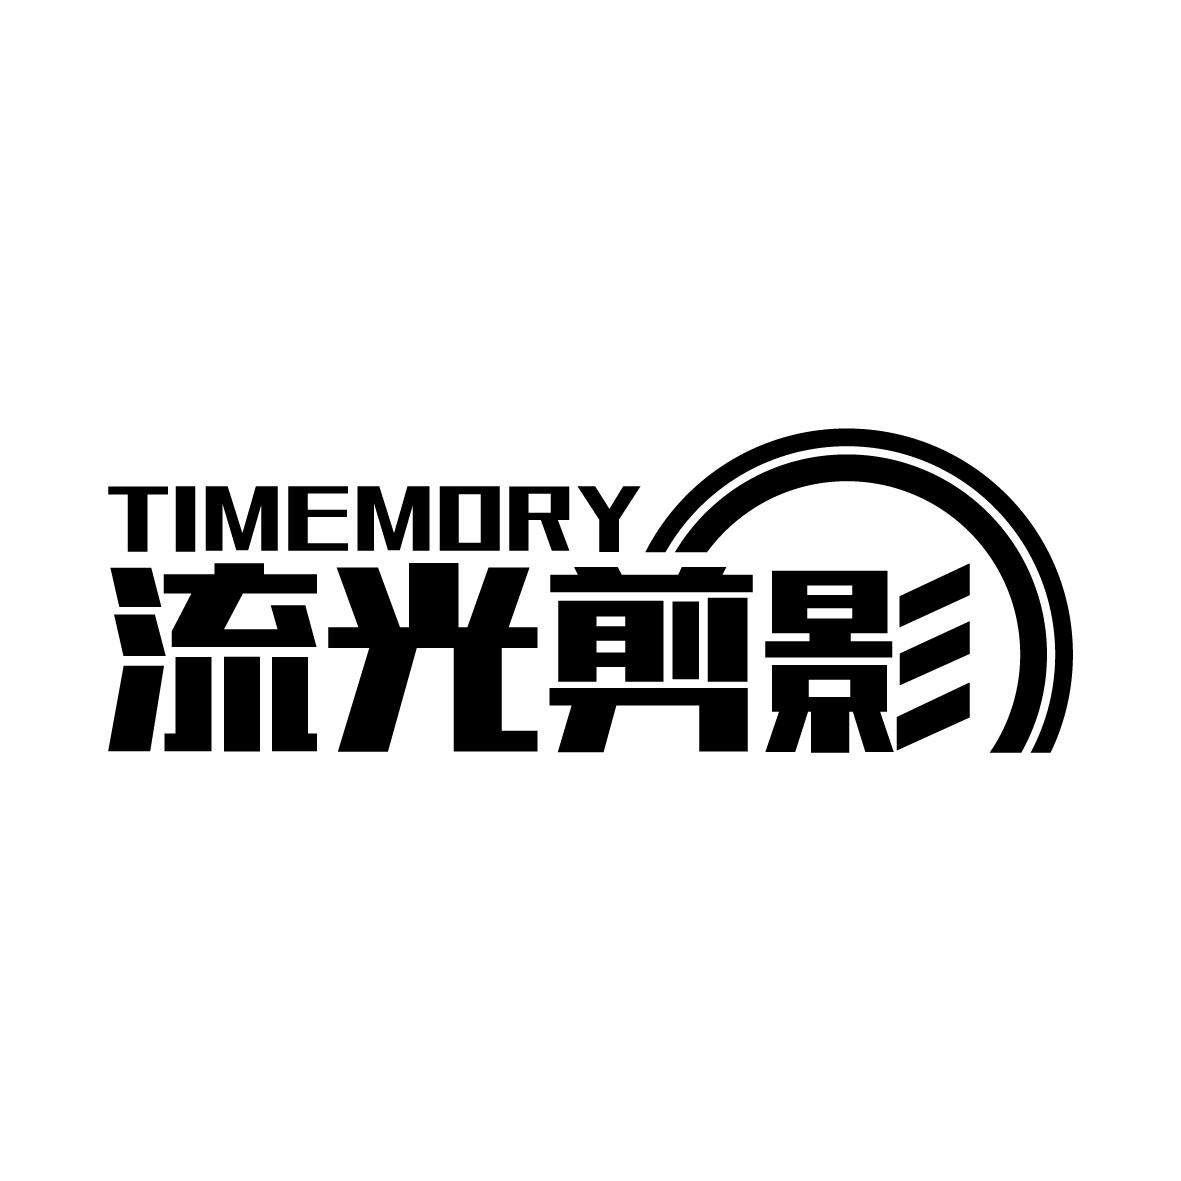 Ӱ TIMEMORY